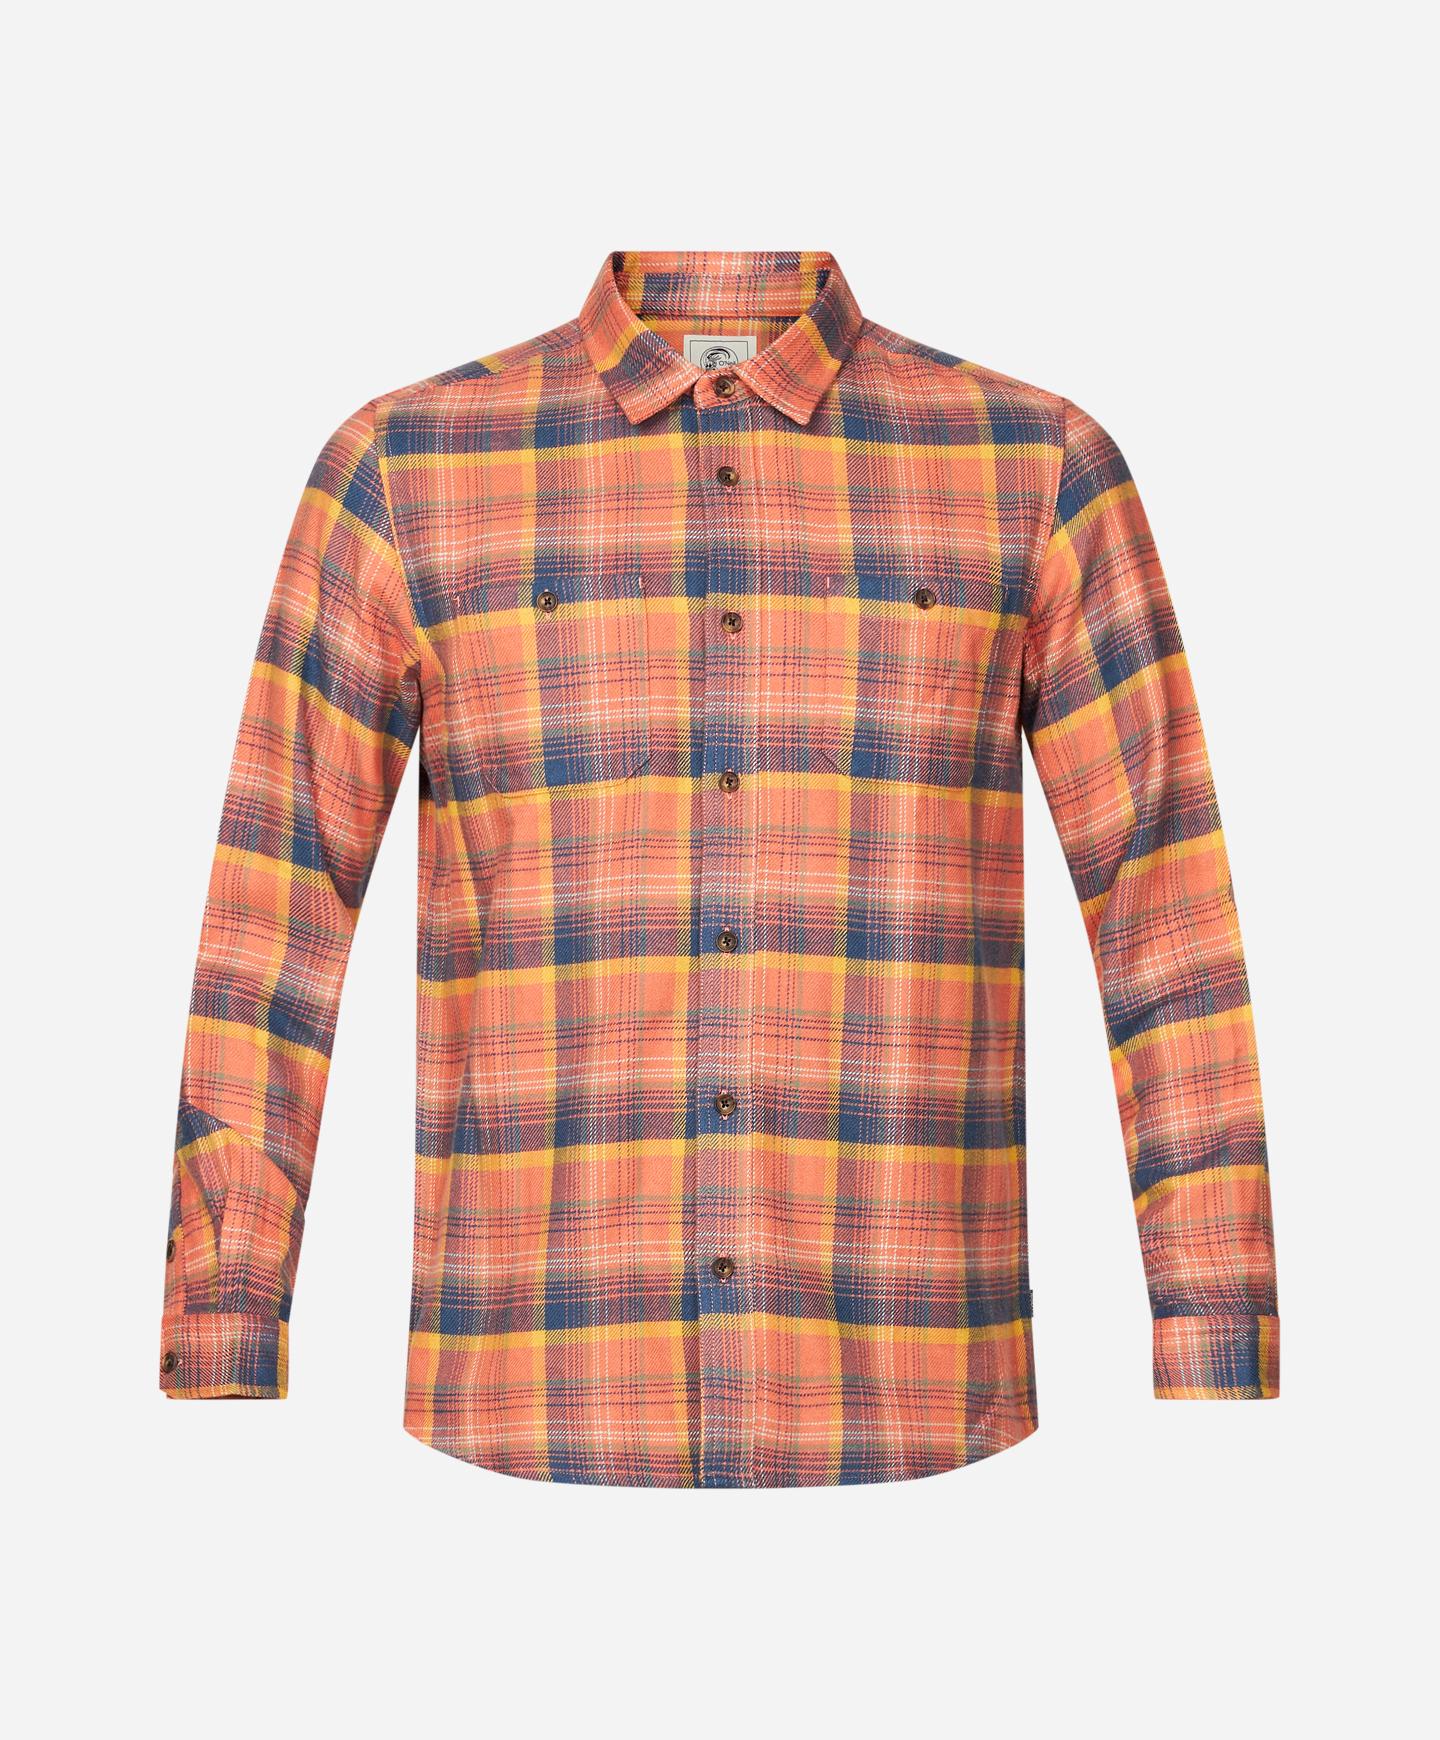 OG Jonez Flannel Shirt - Auburn